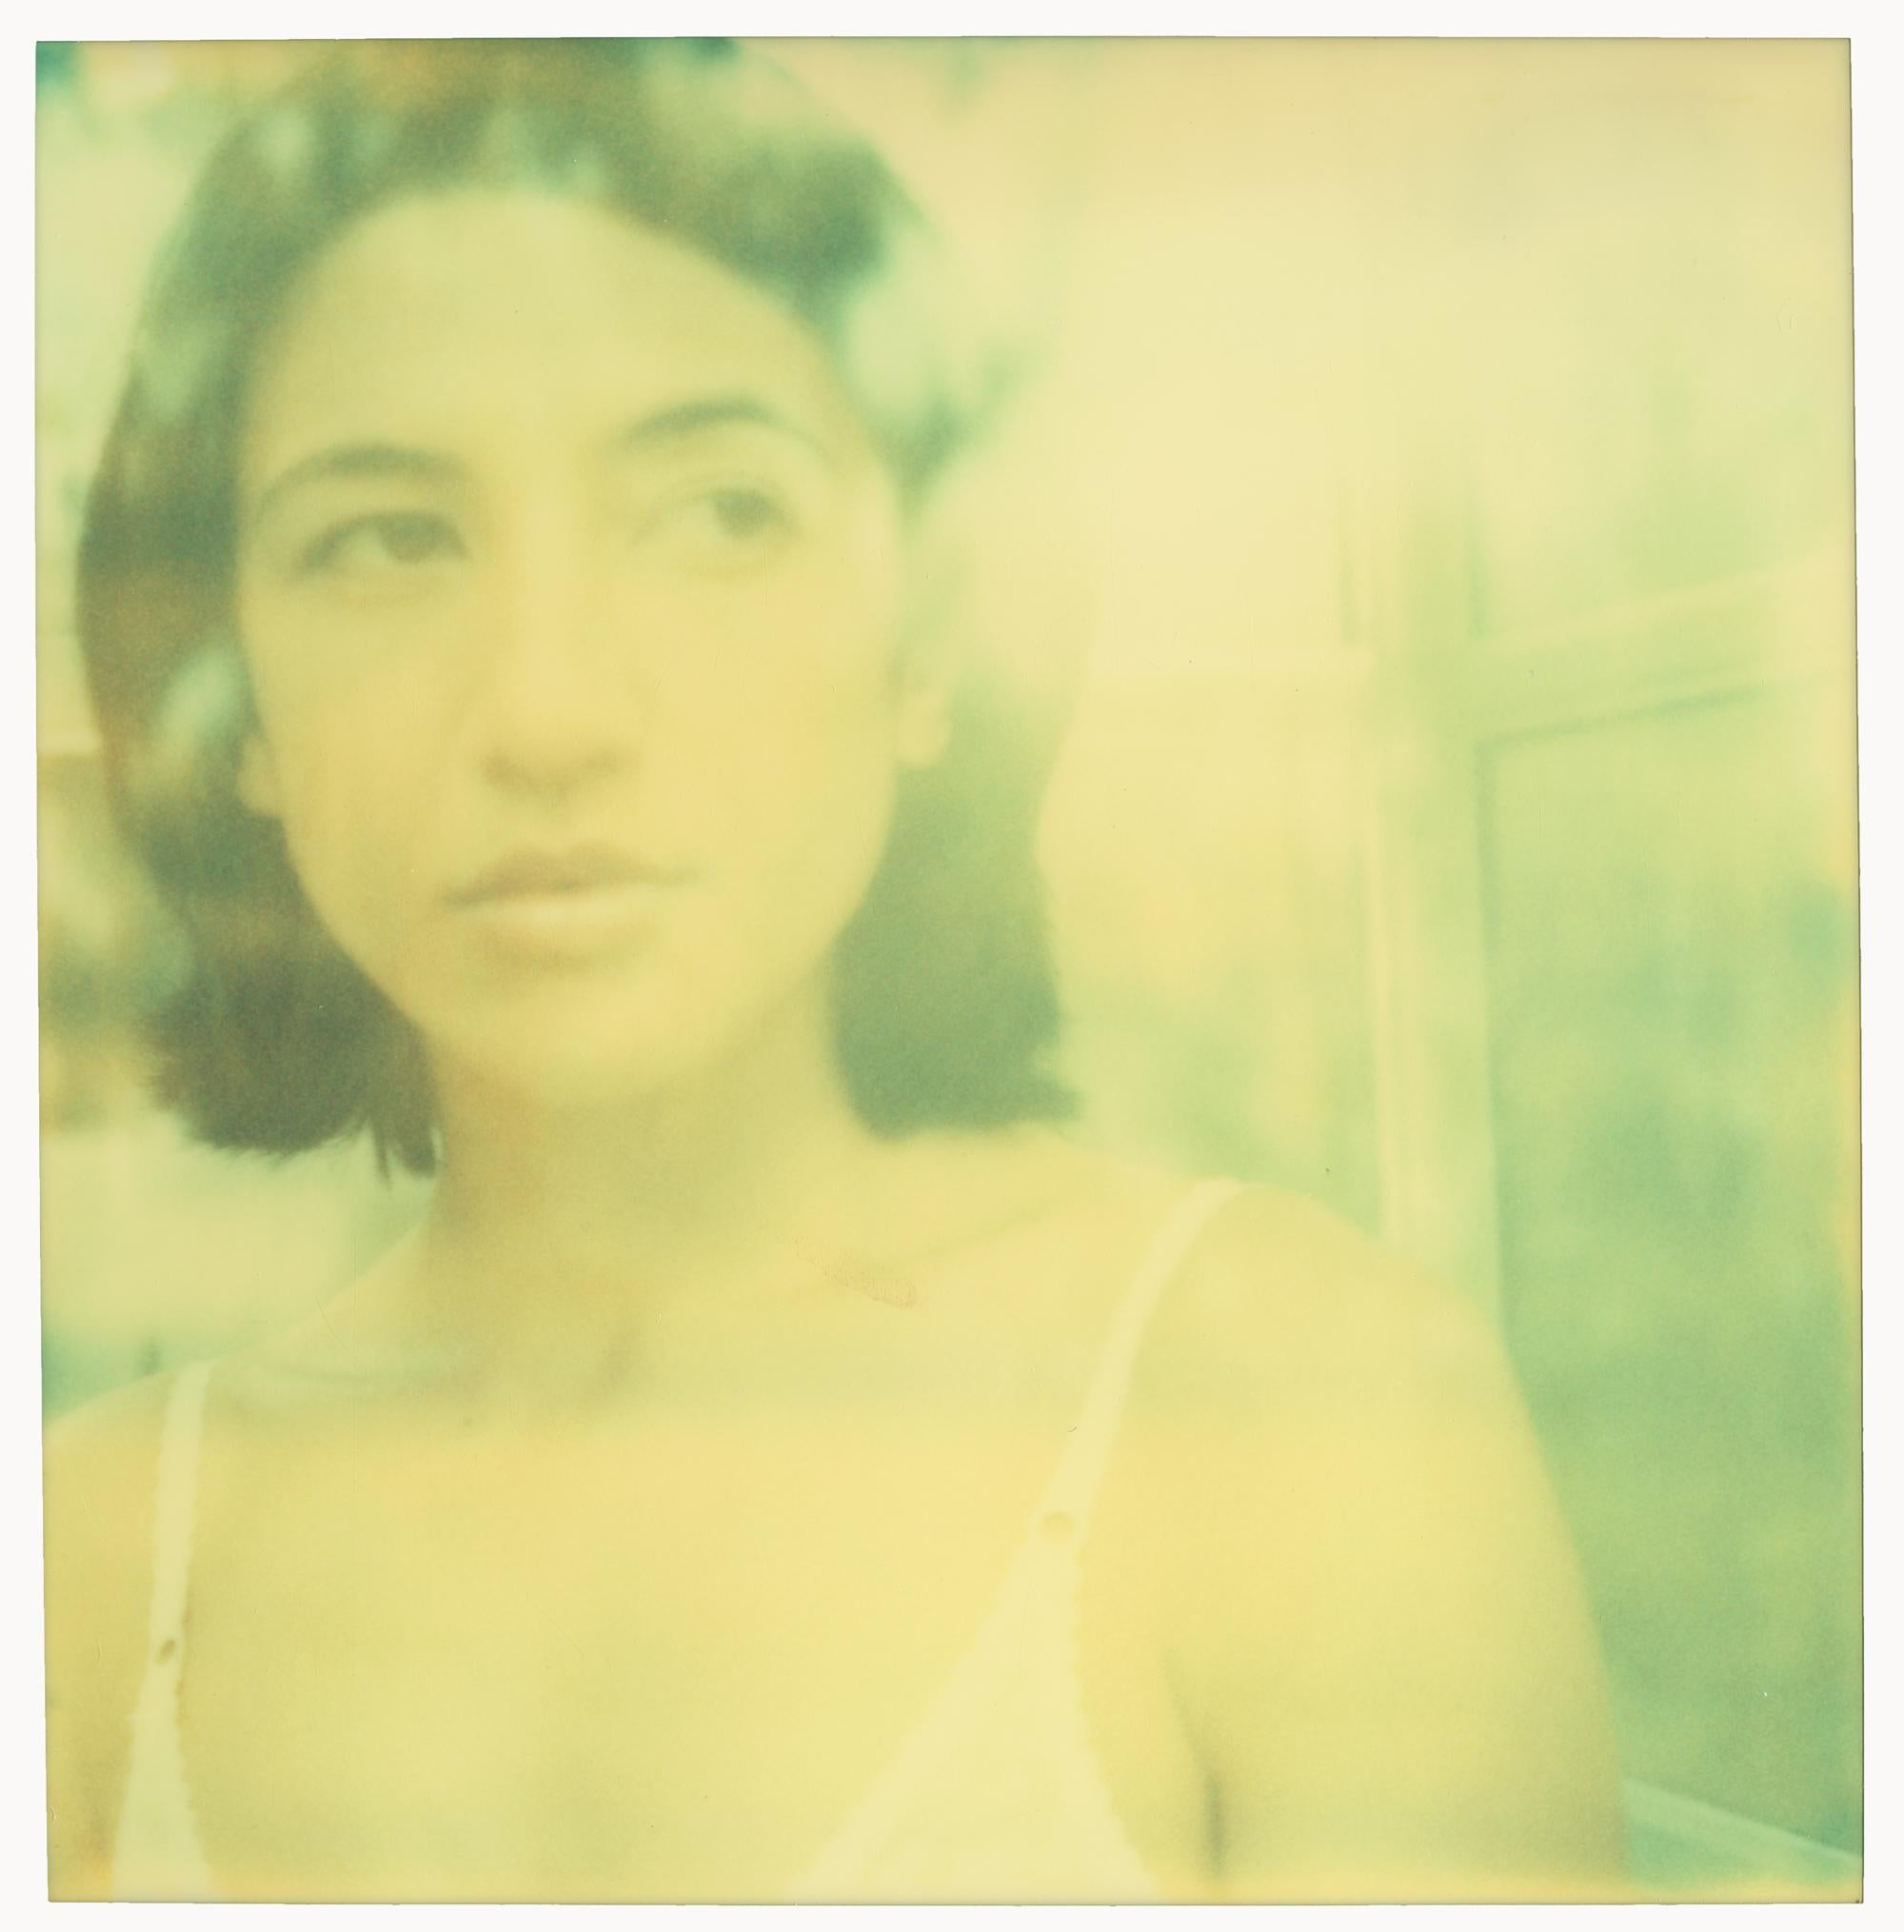 Stefanie Schneider Nude Photograph - Enchanted (Saigon) - analog vintage print, 58x56cm